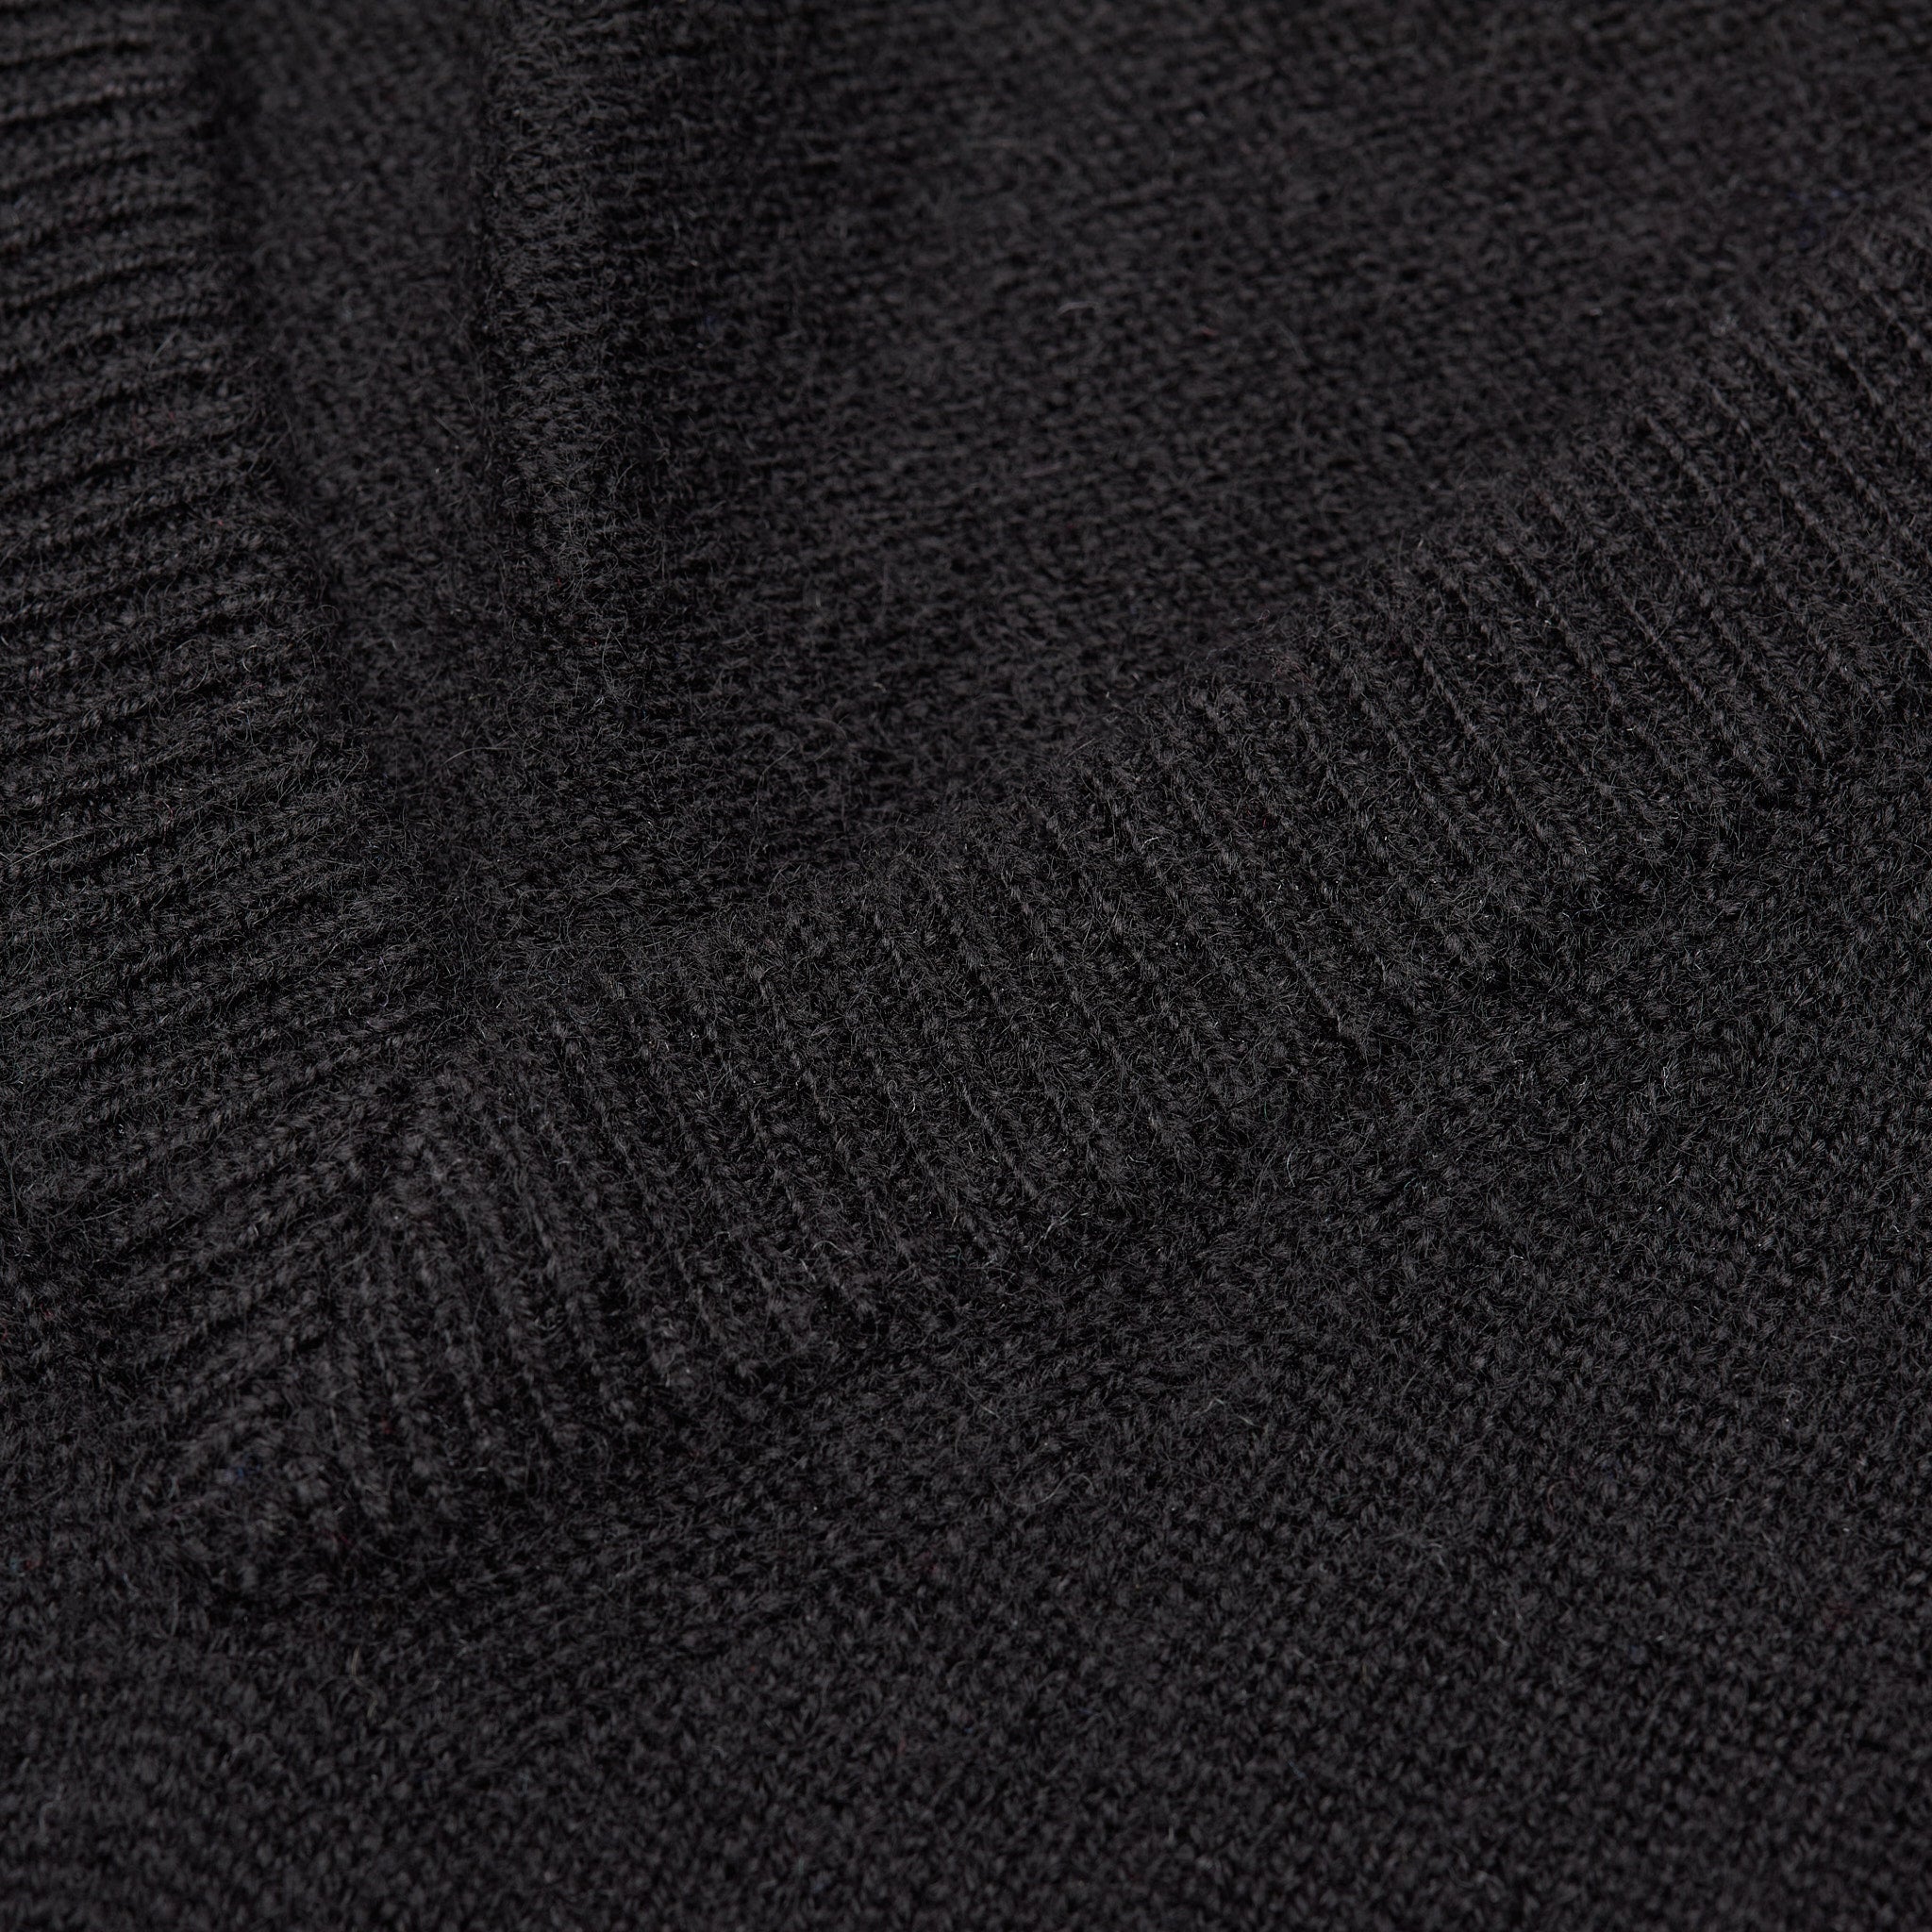 FEDELI Black Cashmere V-Neck Sleeveless Sweater NEW FEDELI